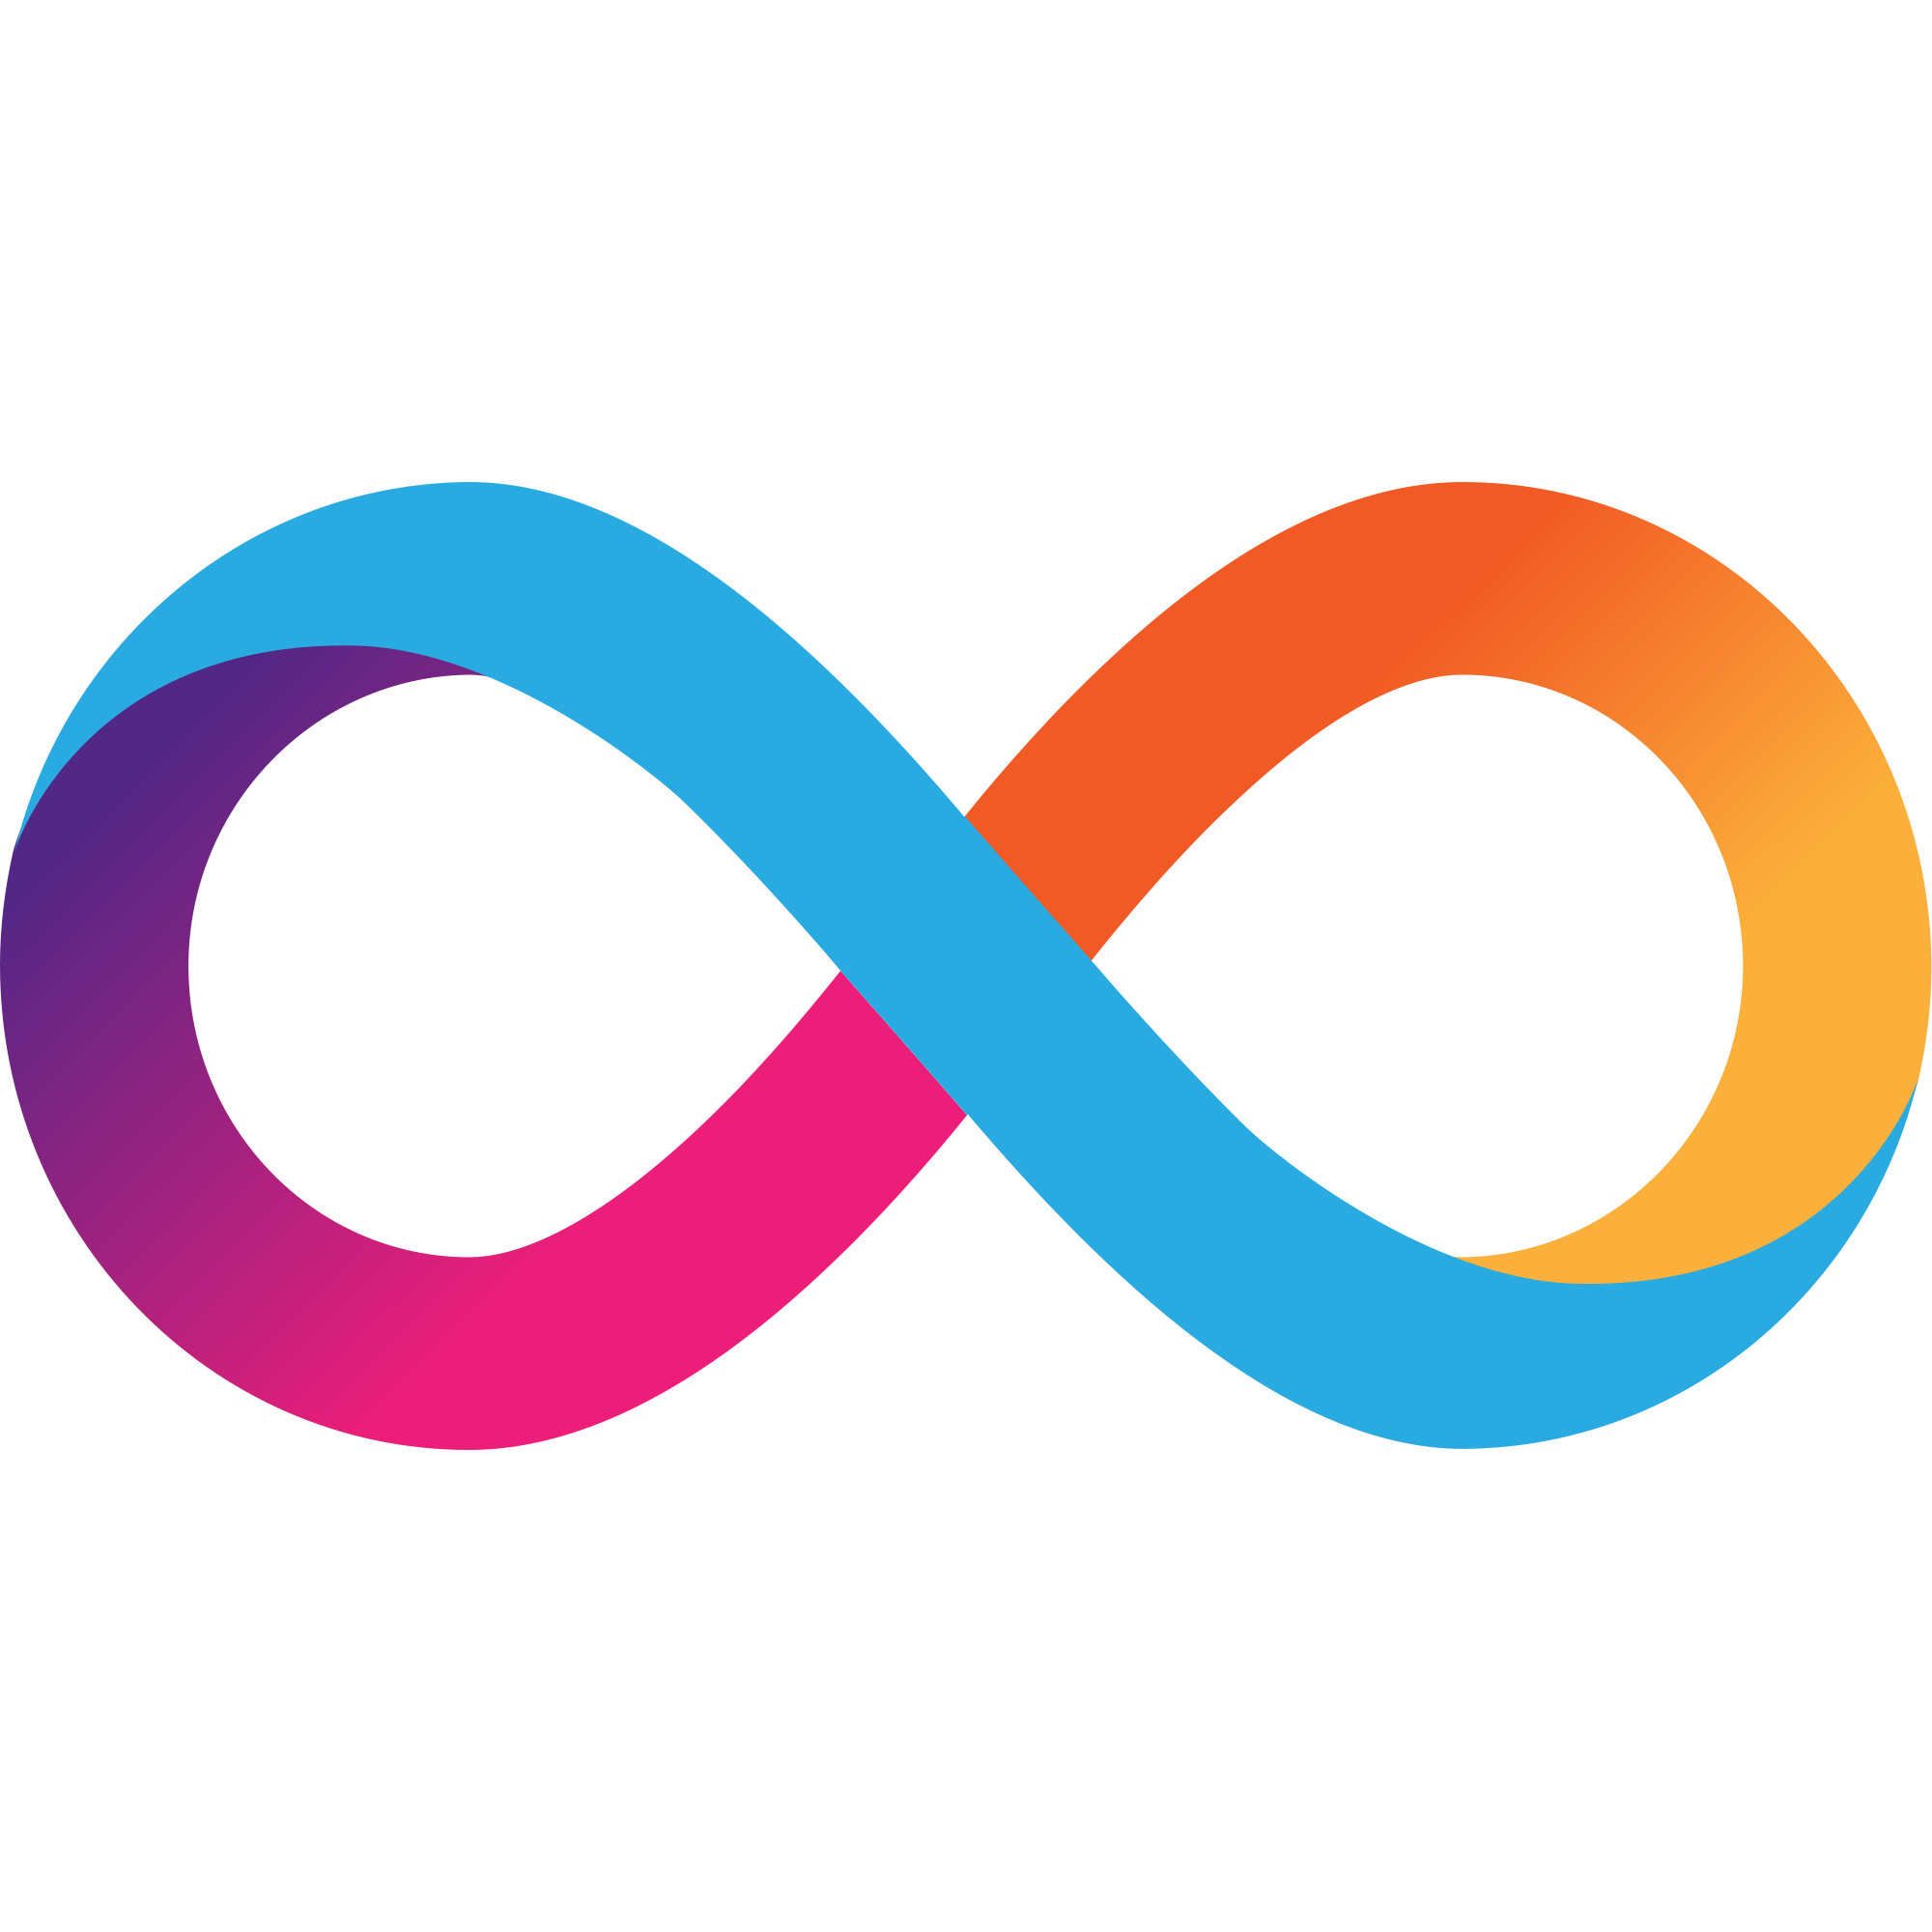 Internet computer network's logo